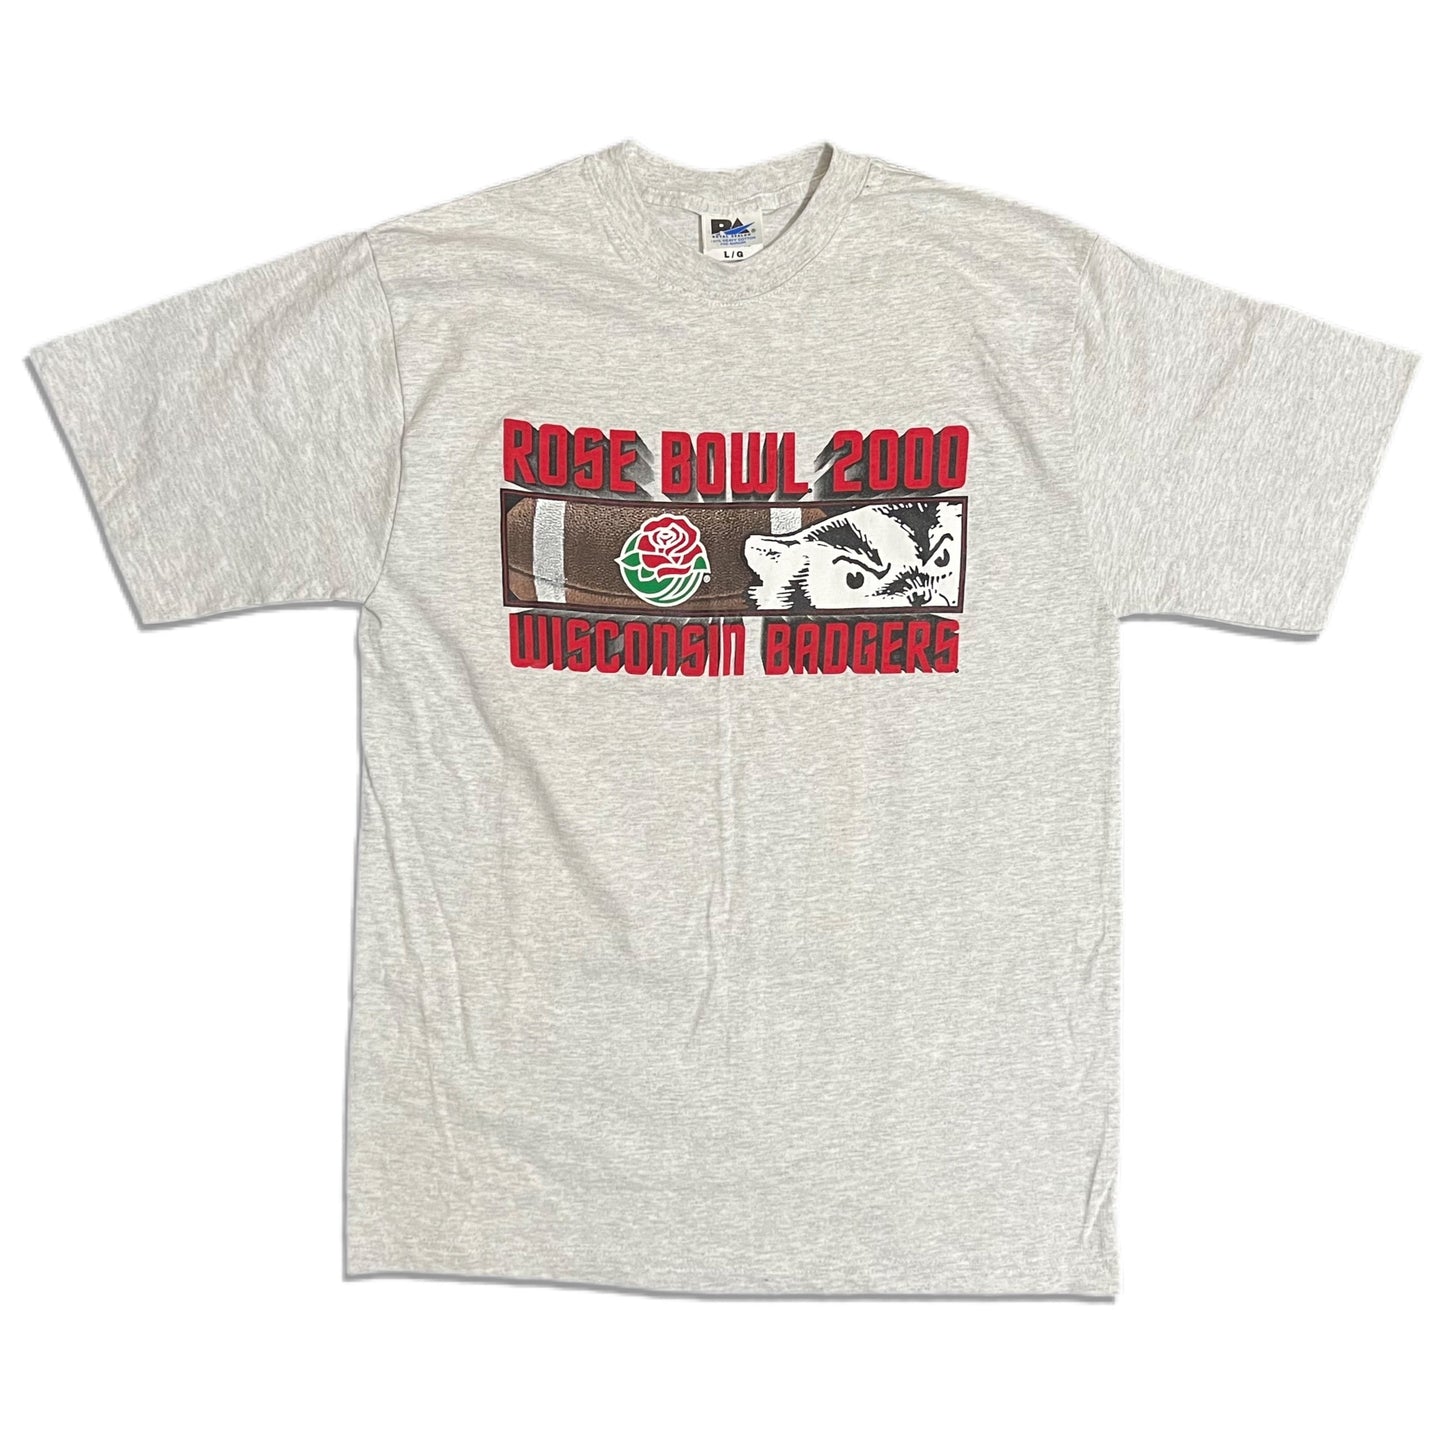 2000 Wisconsin Badgers Rose Bowl T Shirt - L